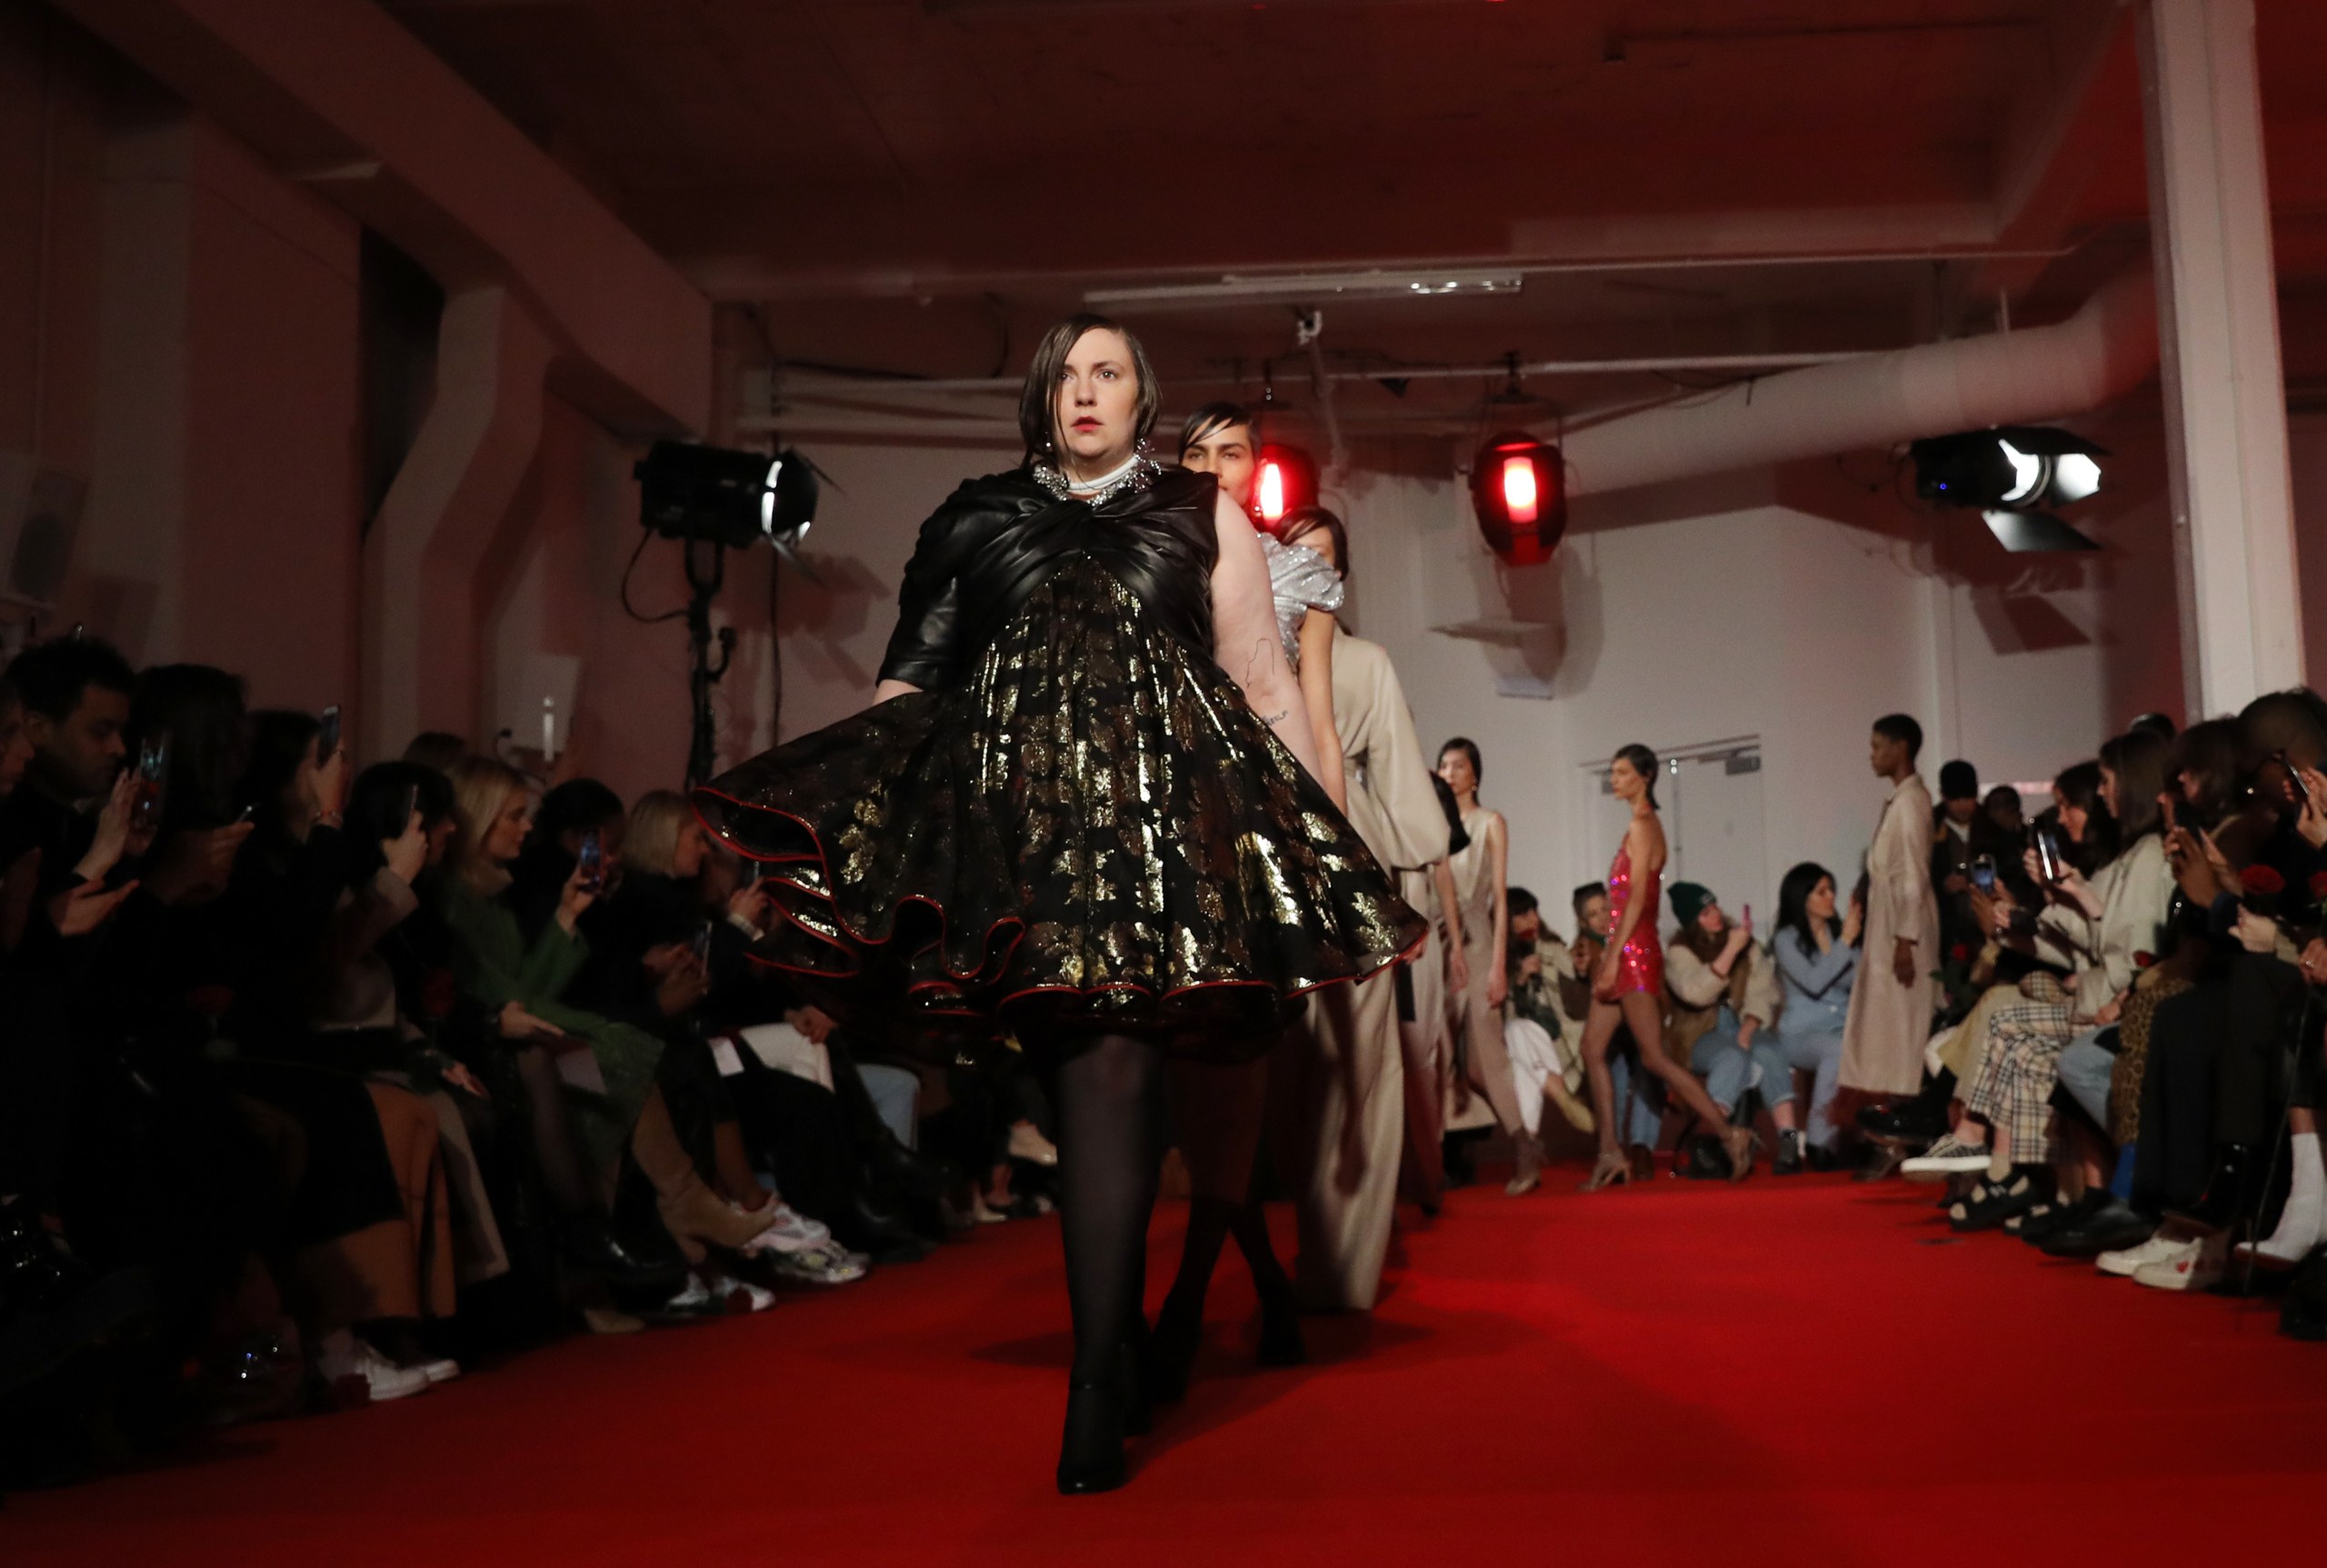 Lena Dunham on Walking Her First Runway at London Fashion Week